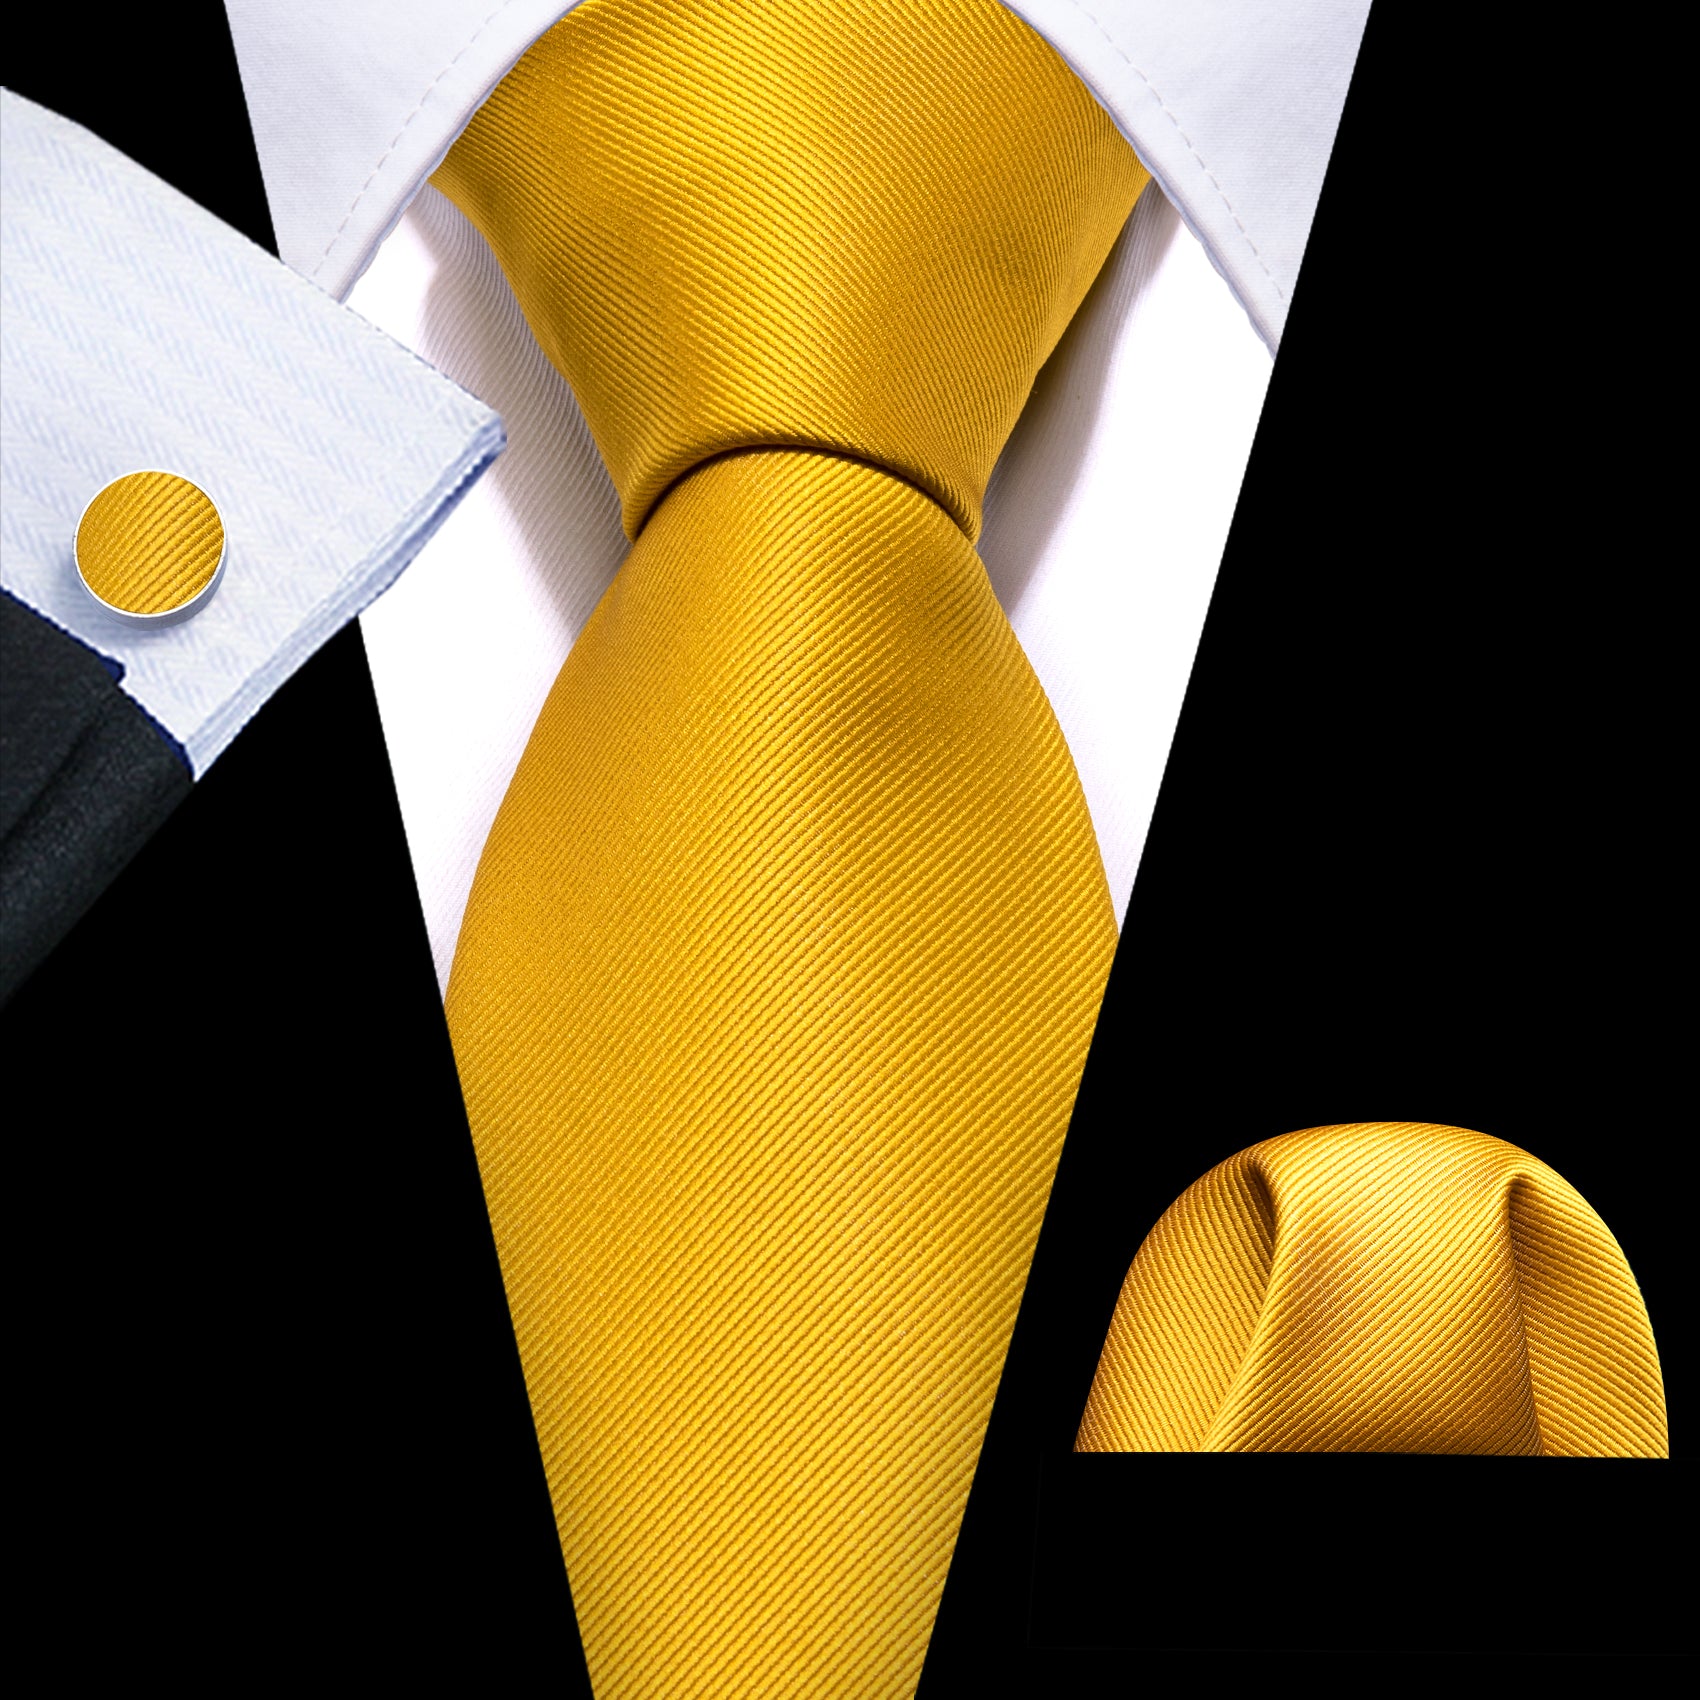 Gold Yellow Solid Silk Tie Pocket Square Cufflinks Set